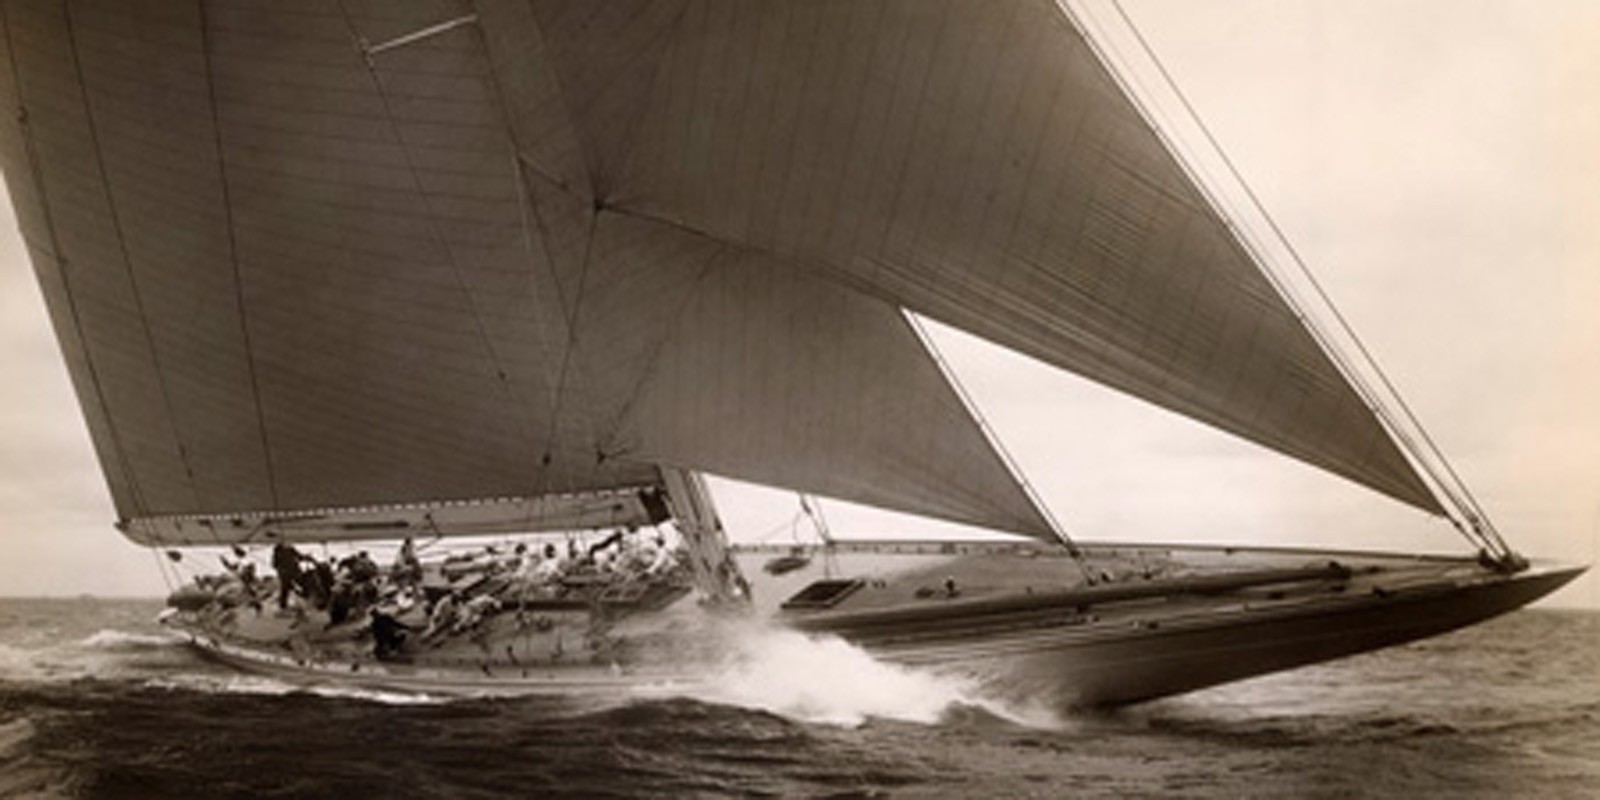 Edwin Levick - J Class Sailboat, 1934 (detail)